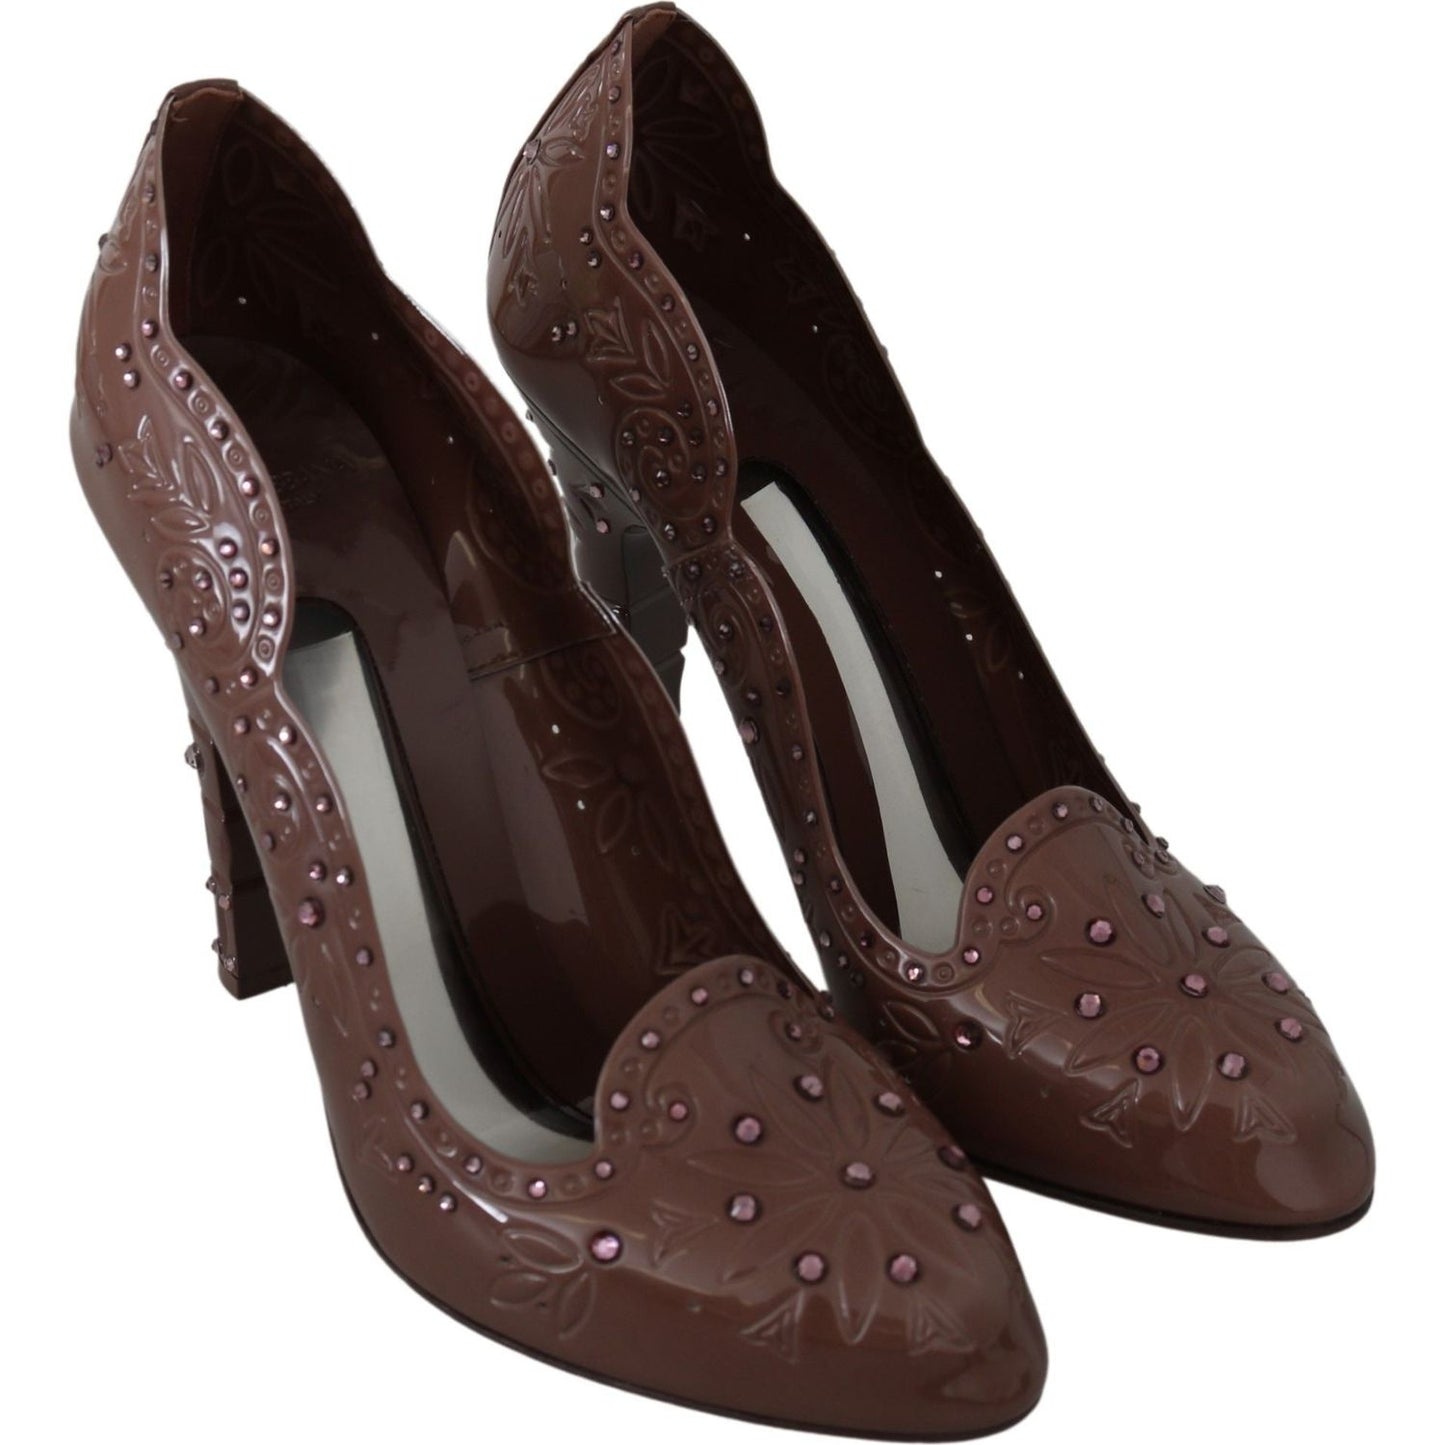 Dolce & Gabbana Elegant Crystal-Embellished Cinderella Pumps brown-floral-crystal-heels-cinderella-shoes IMG_8045-60eeac55-5a5.jpg